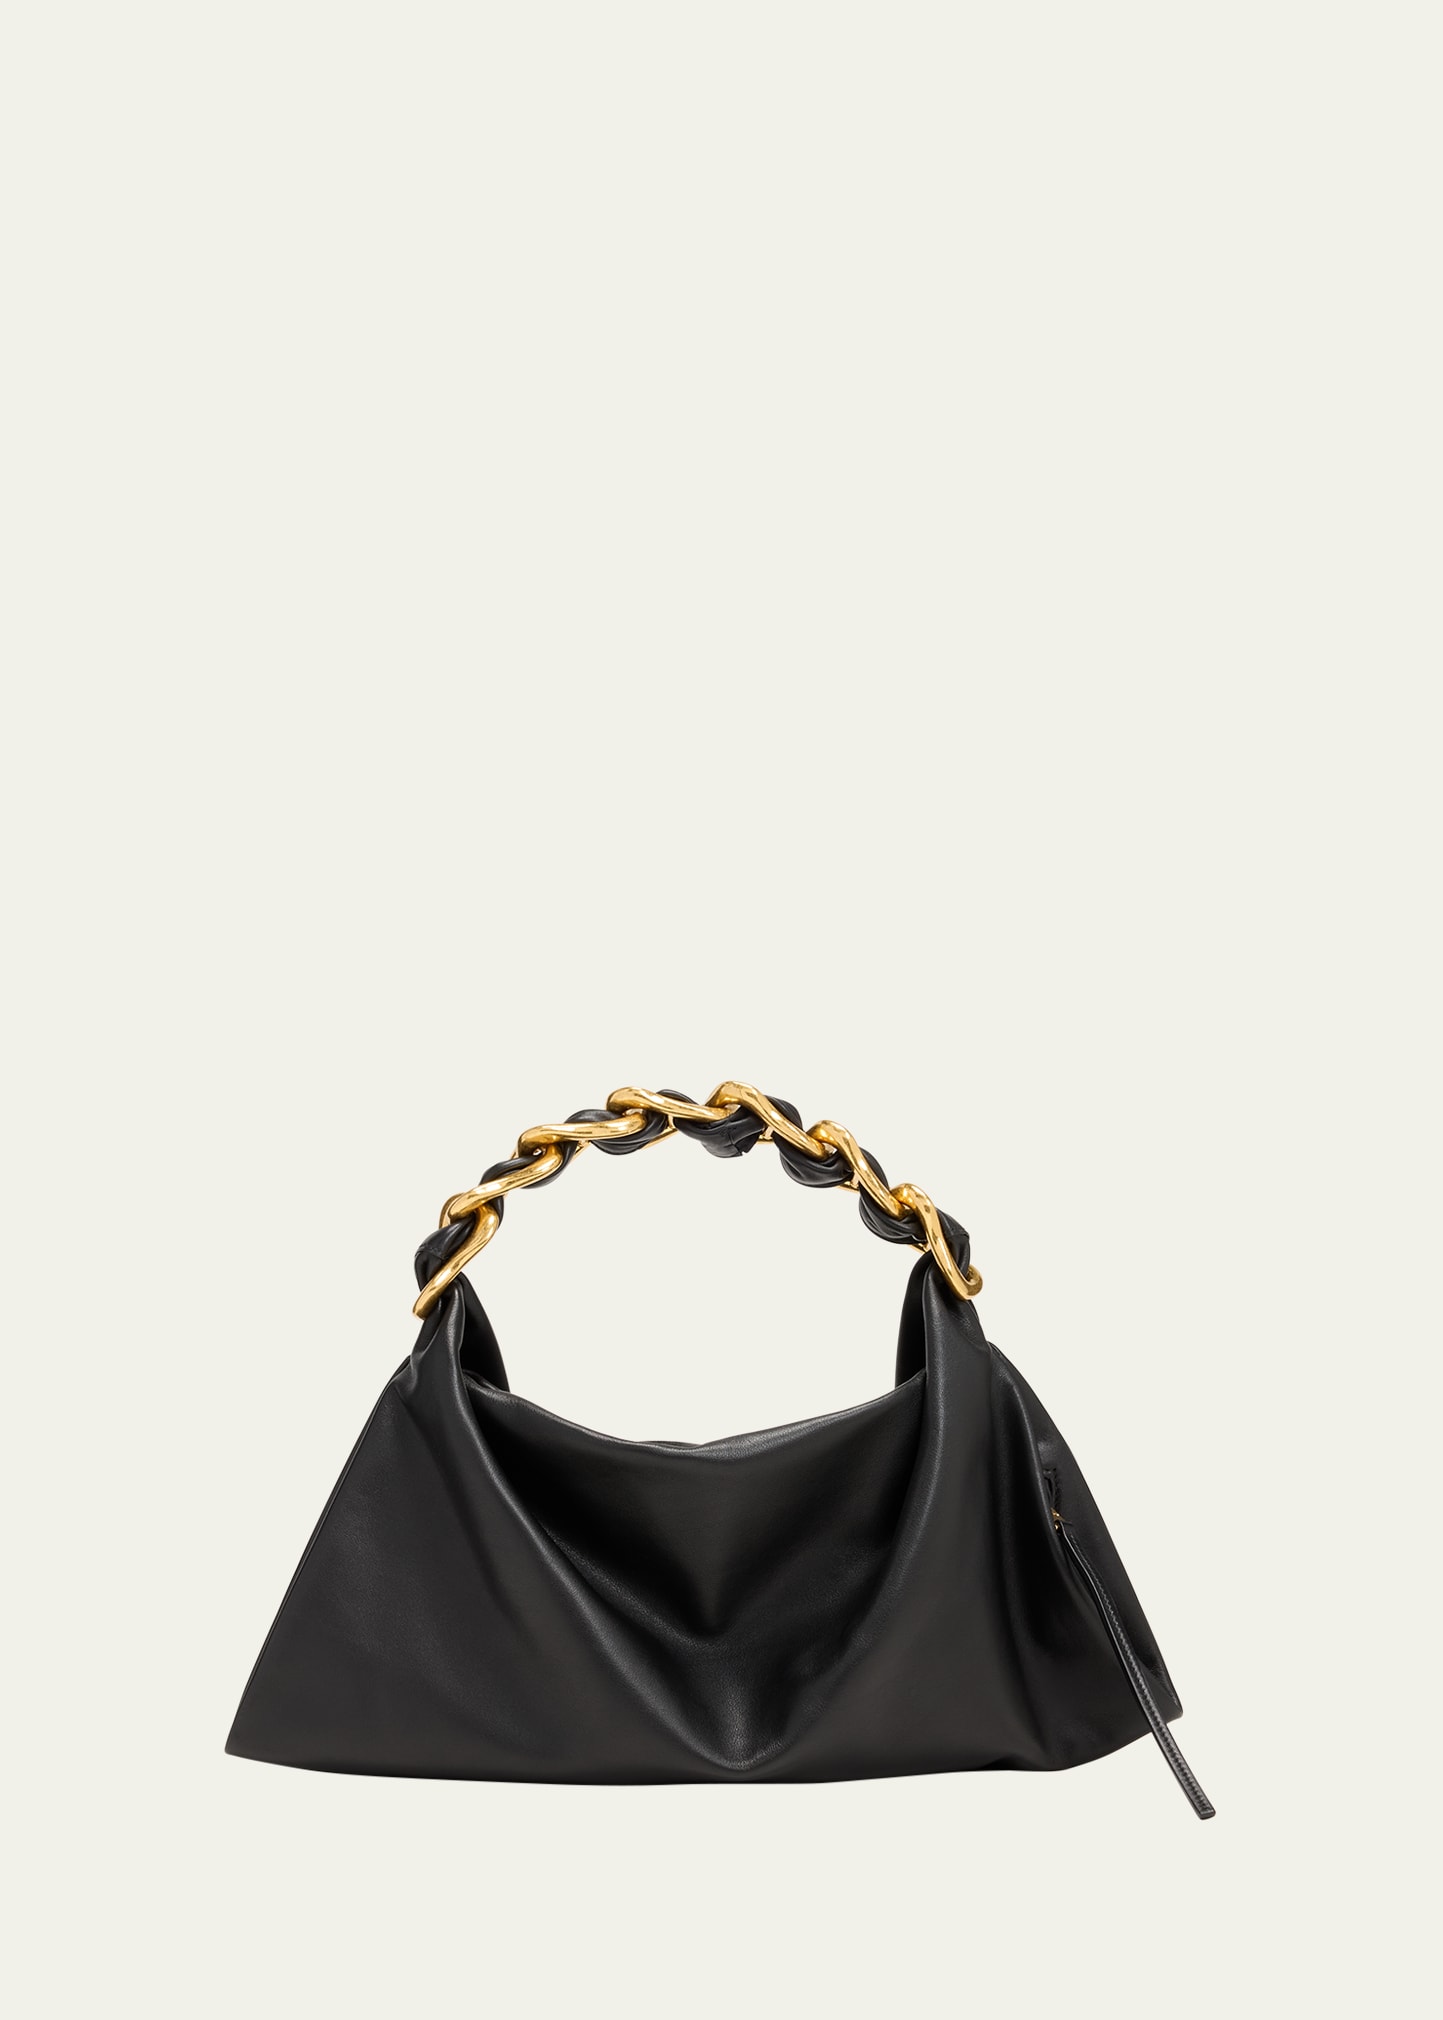 Swan Small Leather Shoulder Bag